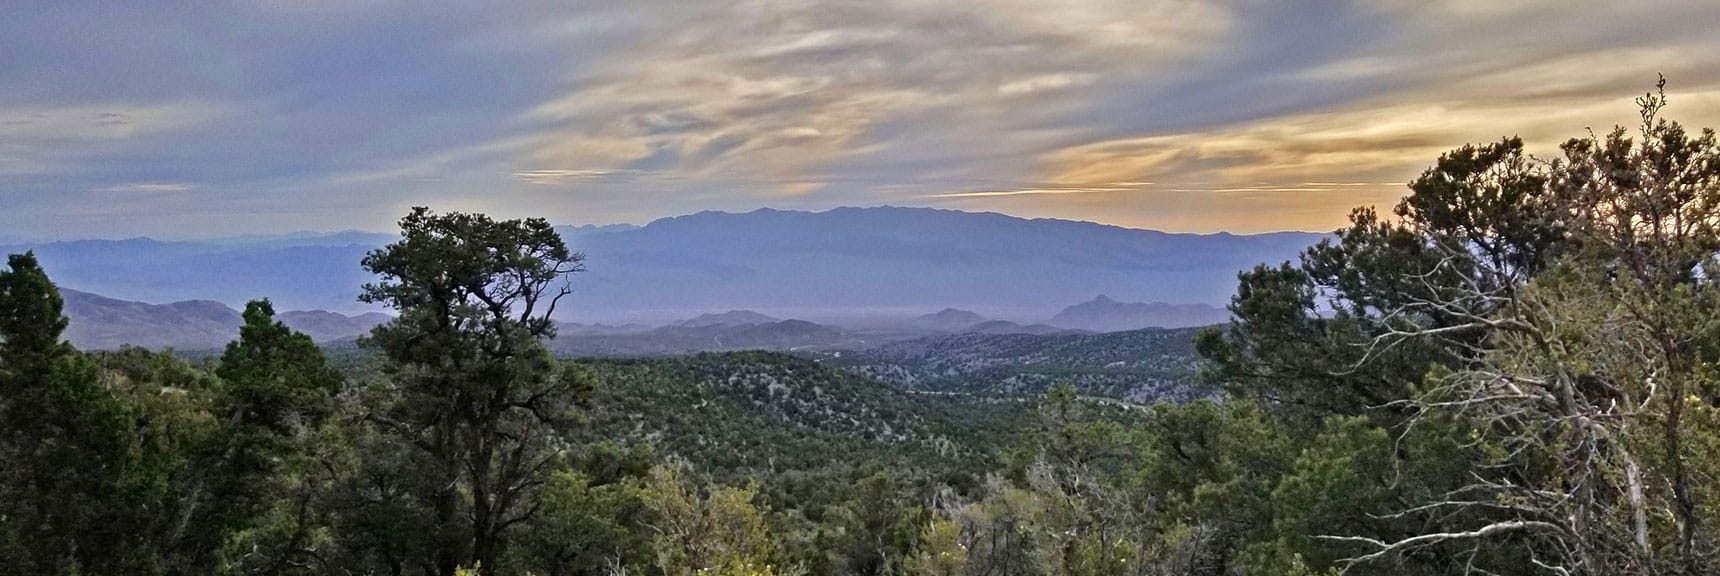 Sheep Range Viewed from High Ridge | Pinyon Pine Loop Trail | Sawmill Trailhead | Lee Canyon | Mt Charleston Wilderness | Spring Mountains, Nevada